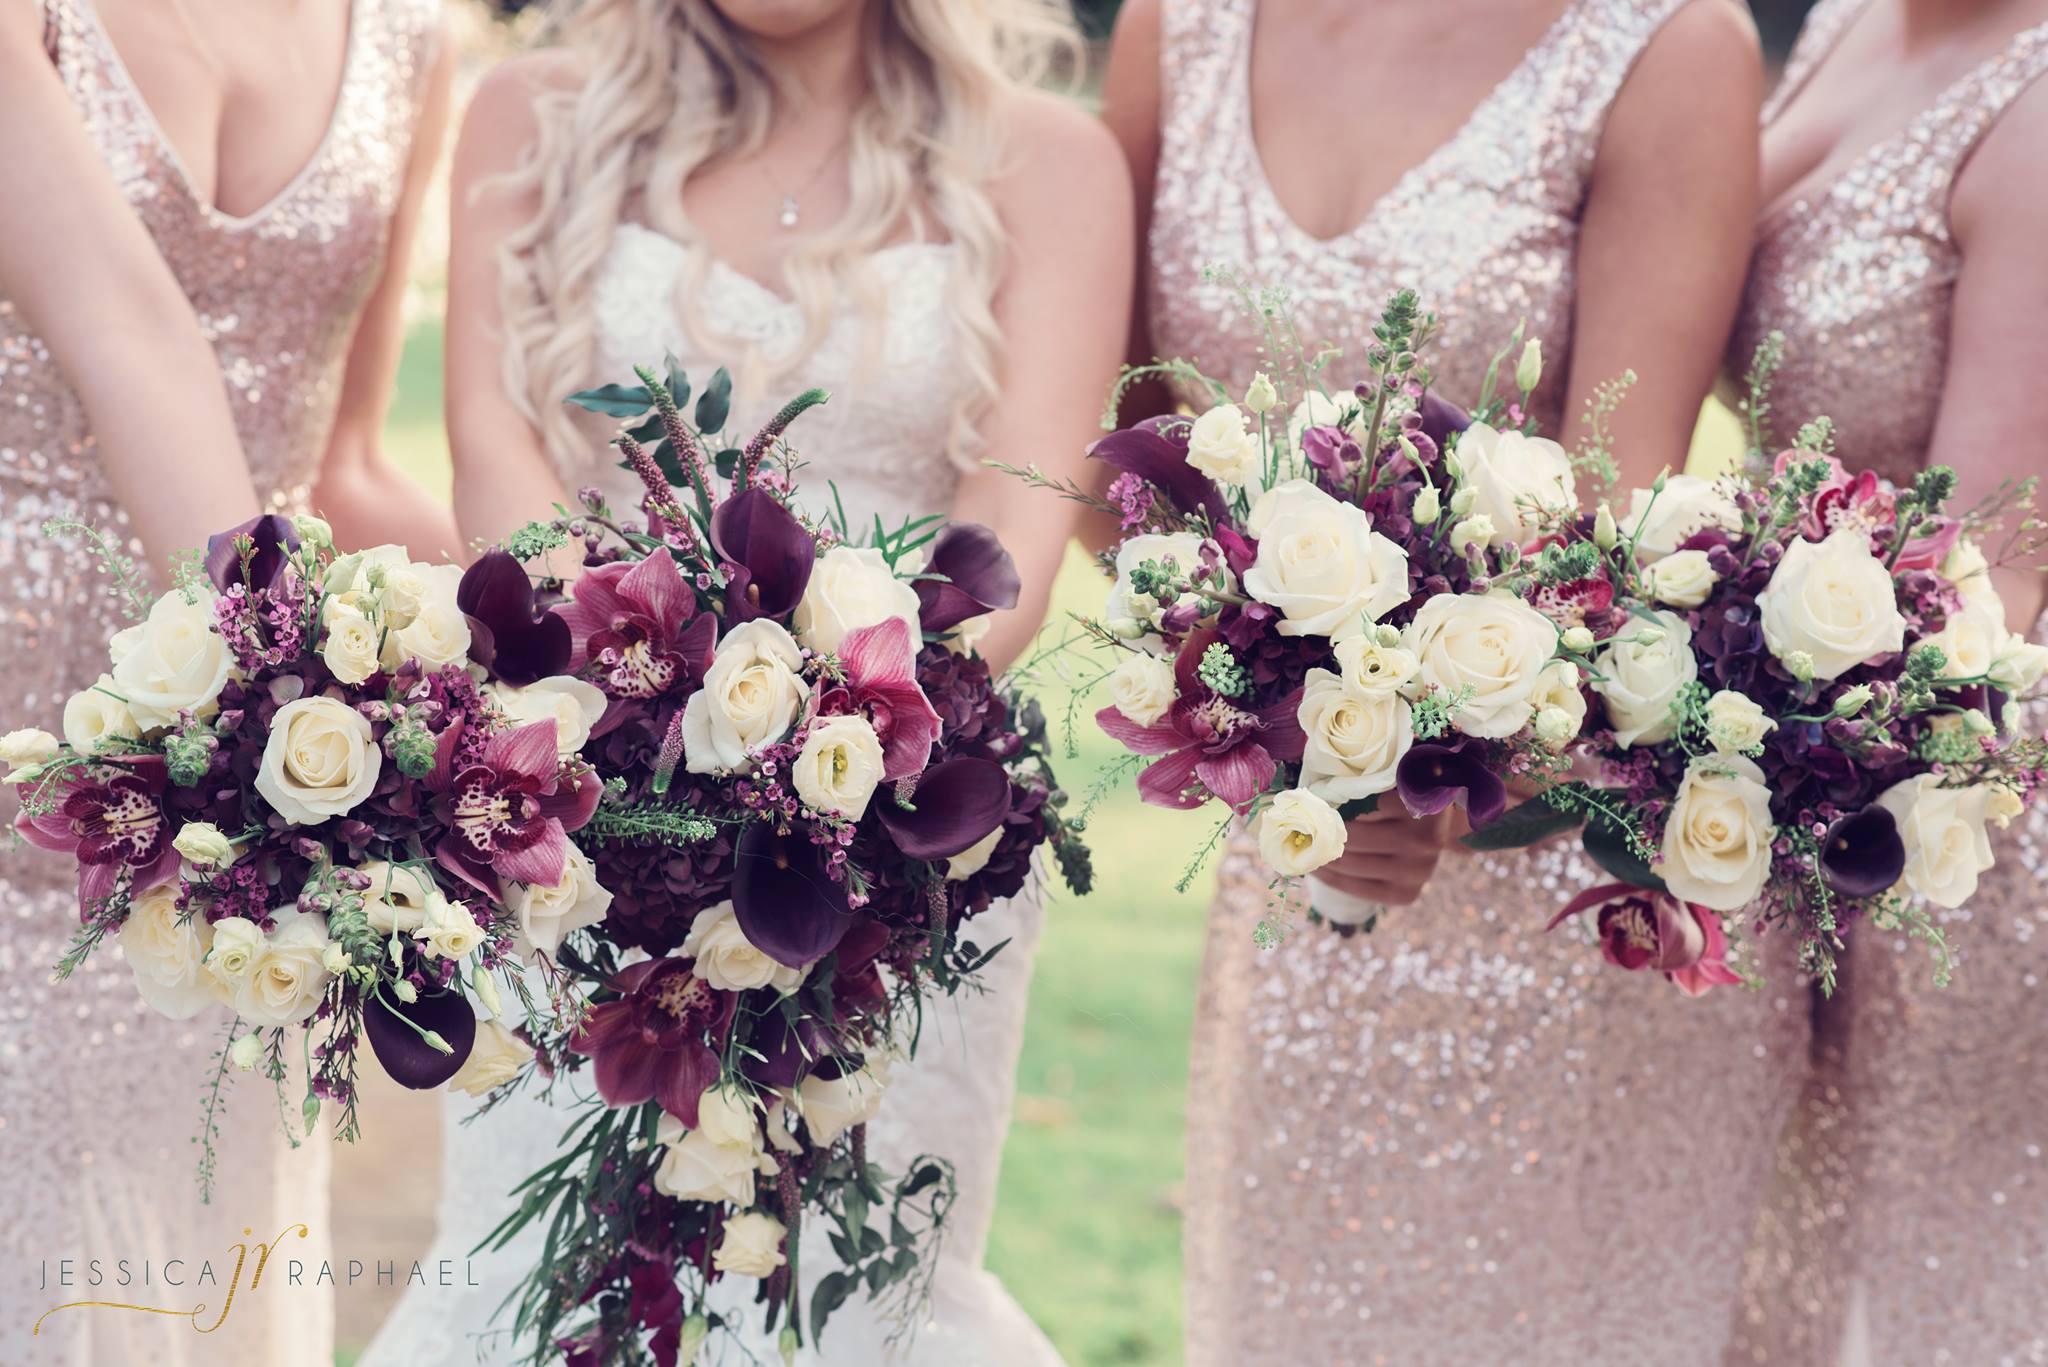 Jessica Raphael Wedding Photography bridesmaids bouquet